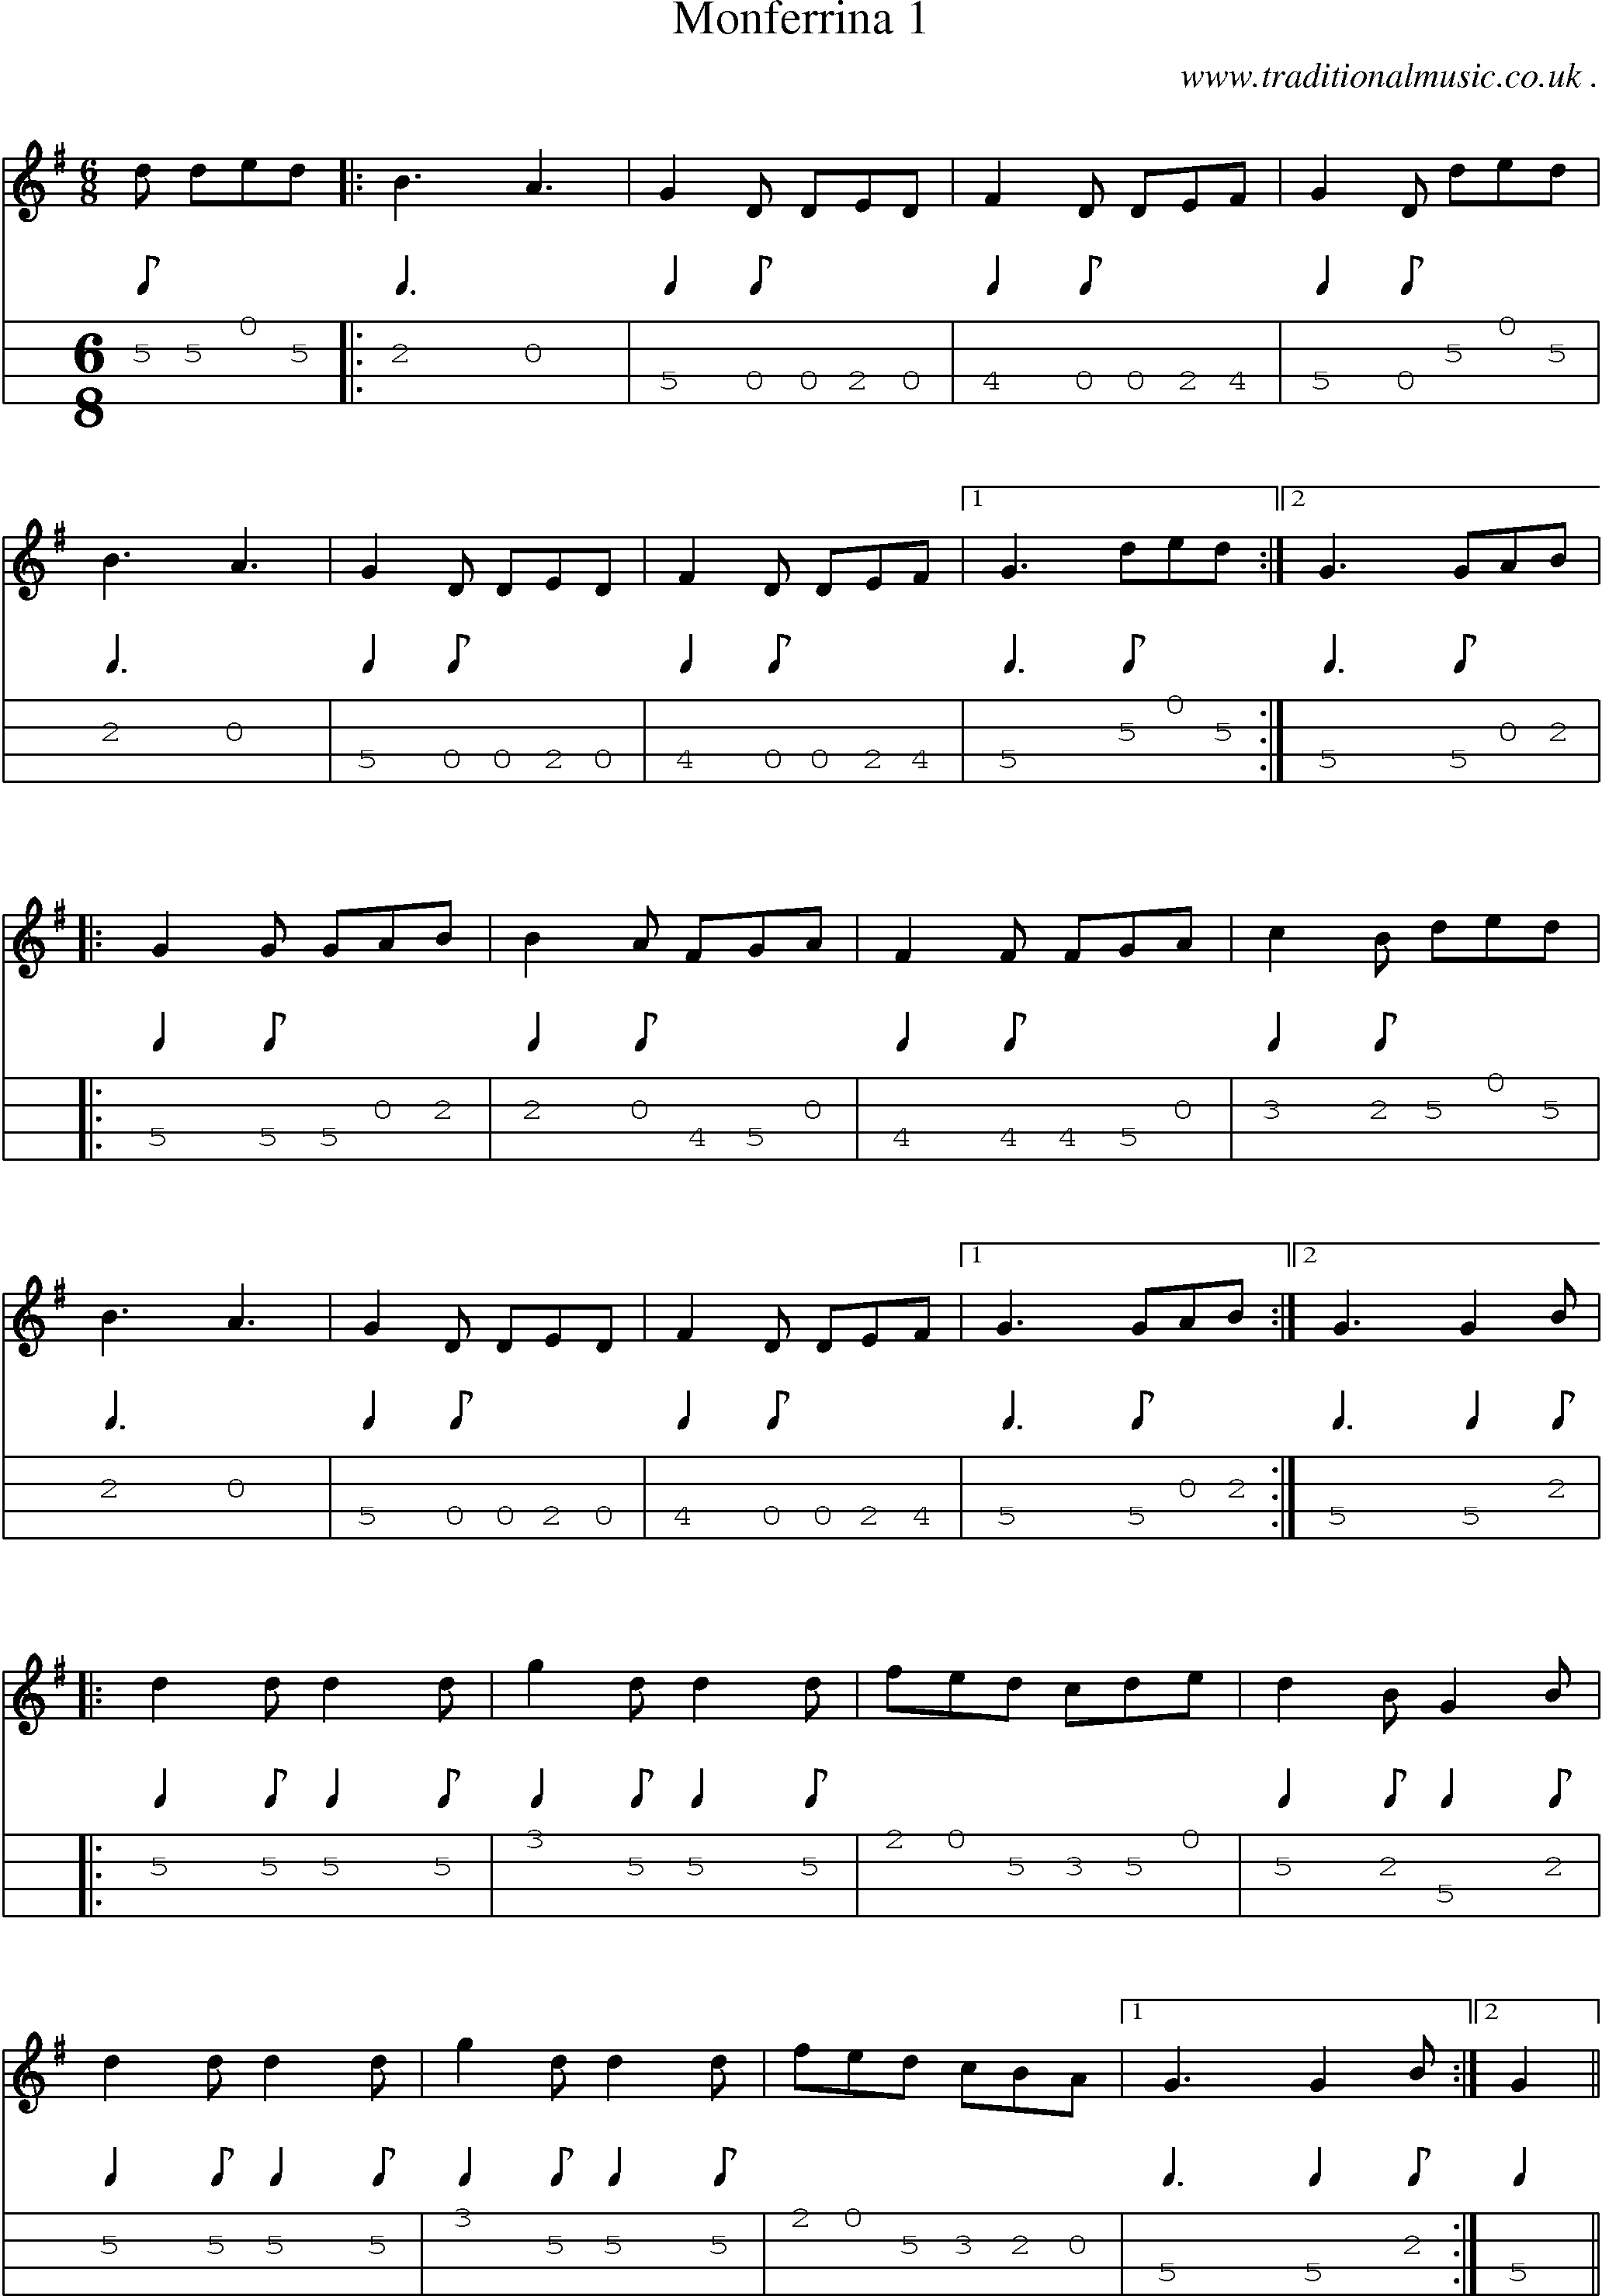 Sheet-Music and Mandolin Tabs for Monferrina 1